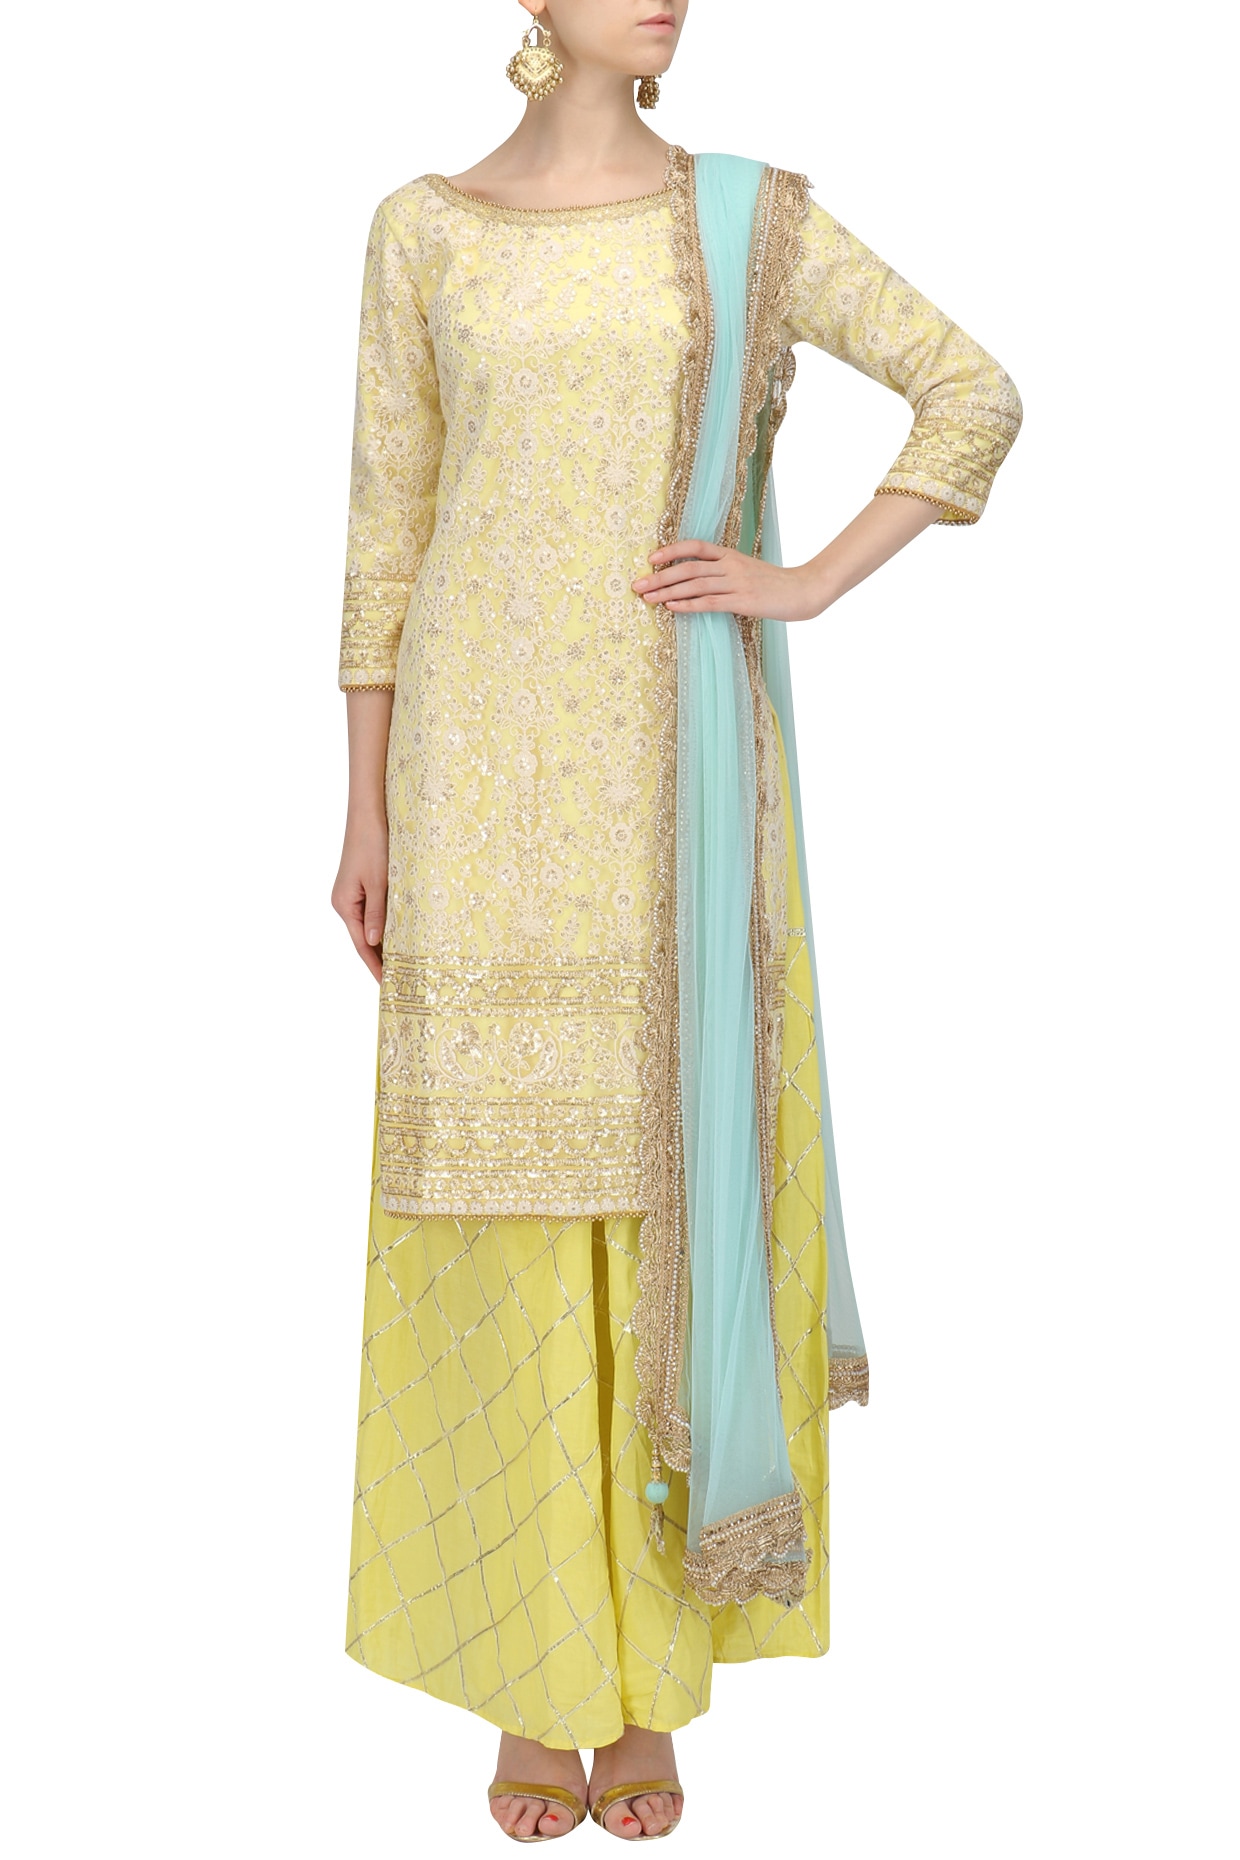 Vinayak Enterprise Premium Cotton Anarkali Gota Patti Work Suit Sharara  With Dupatta at Rs 2599 in Surat